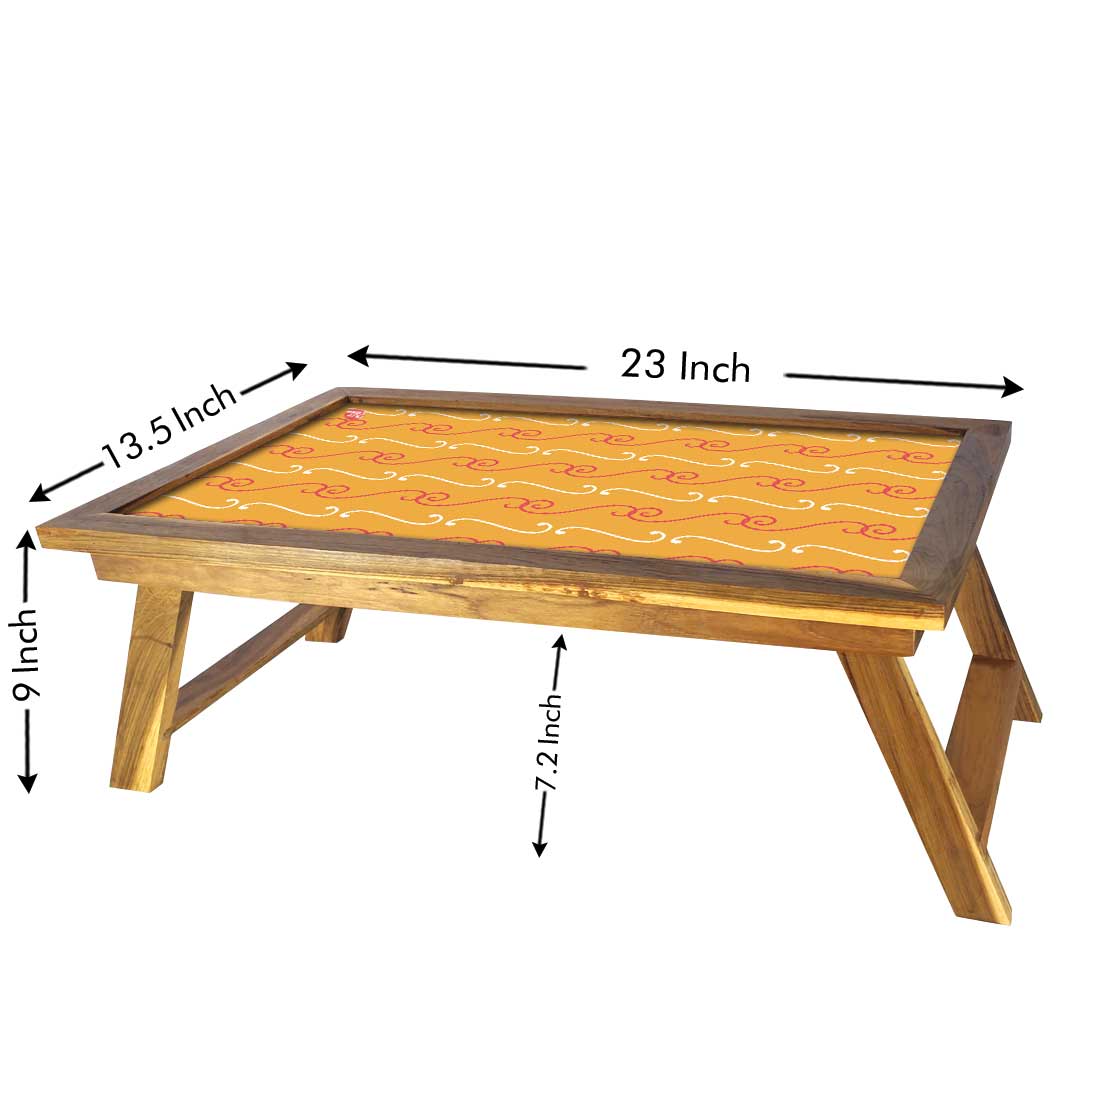 Nutcase Folding Laptop Table For Home Bed Lapdesk Breakfast Table Foldable Teak Wooden Study Desk - Ethnic Pattern Orange Nutcase